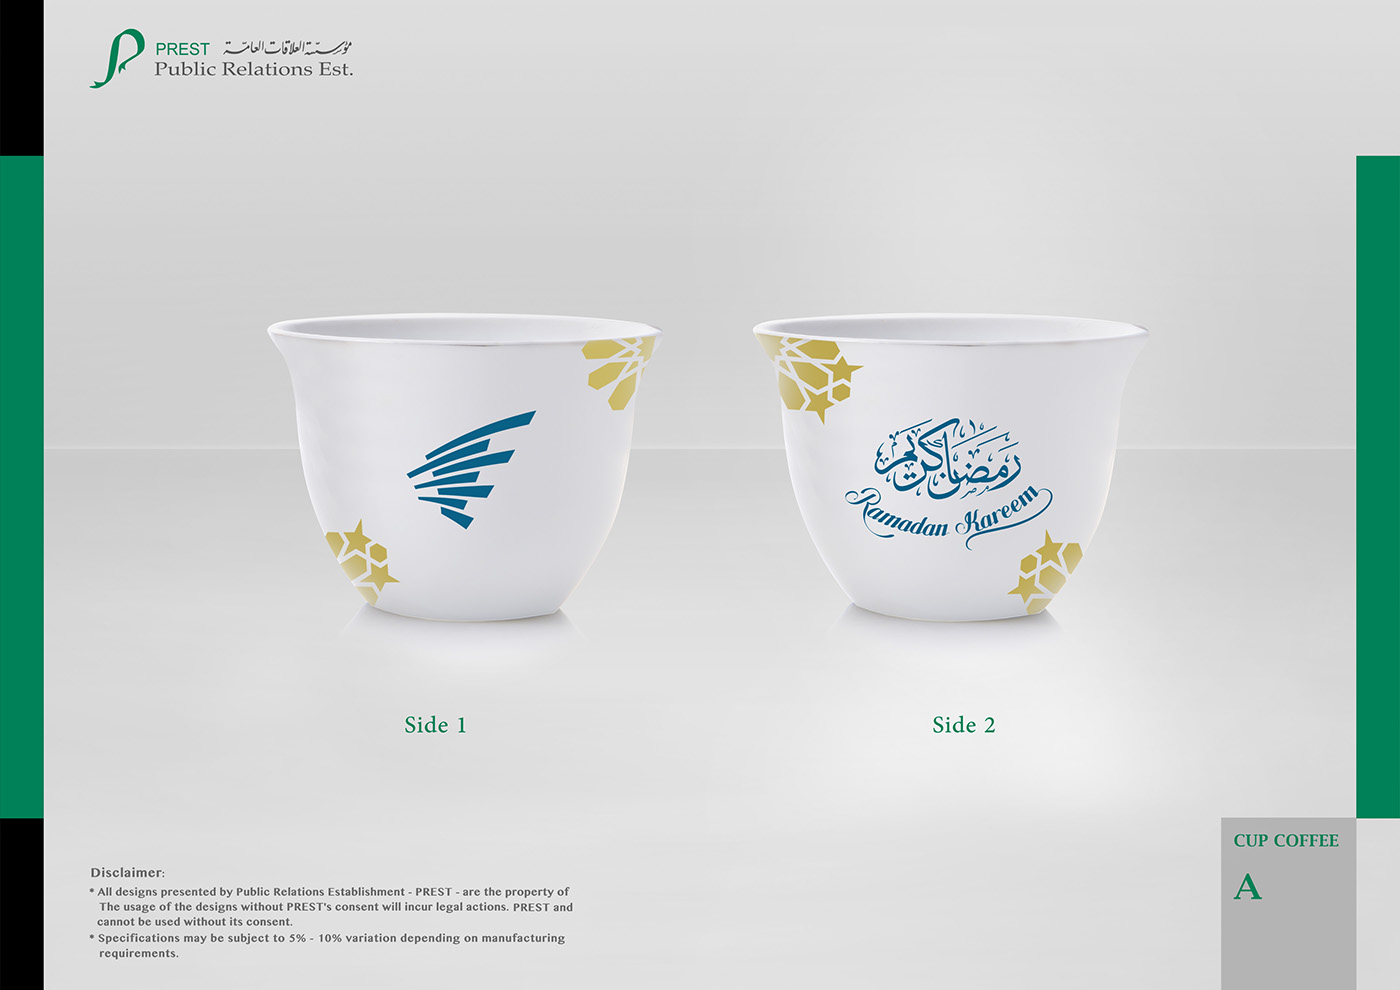 ramadan giftbox gift adnec UAE